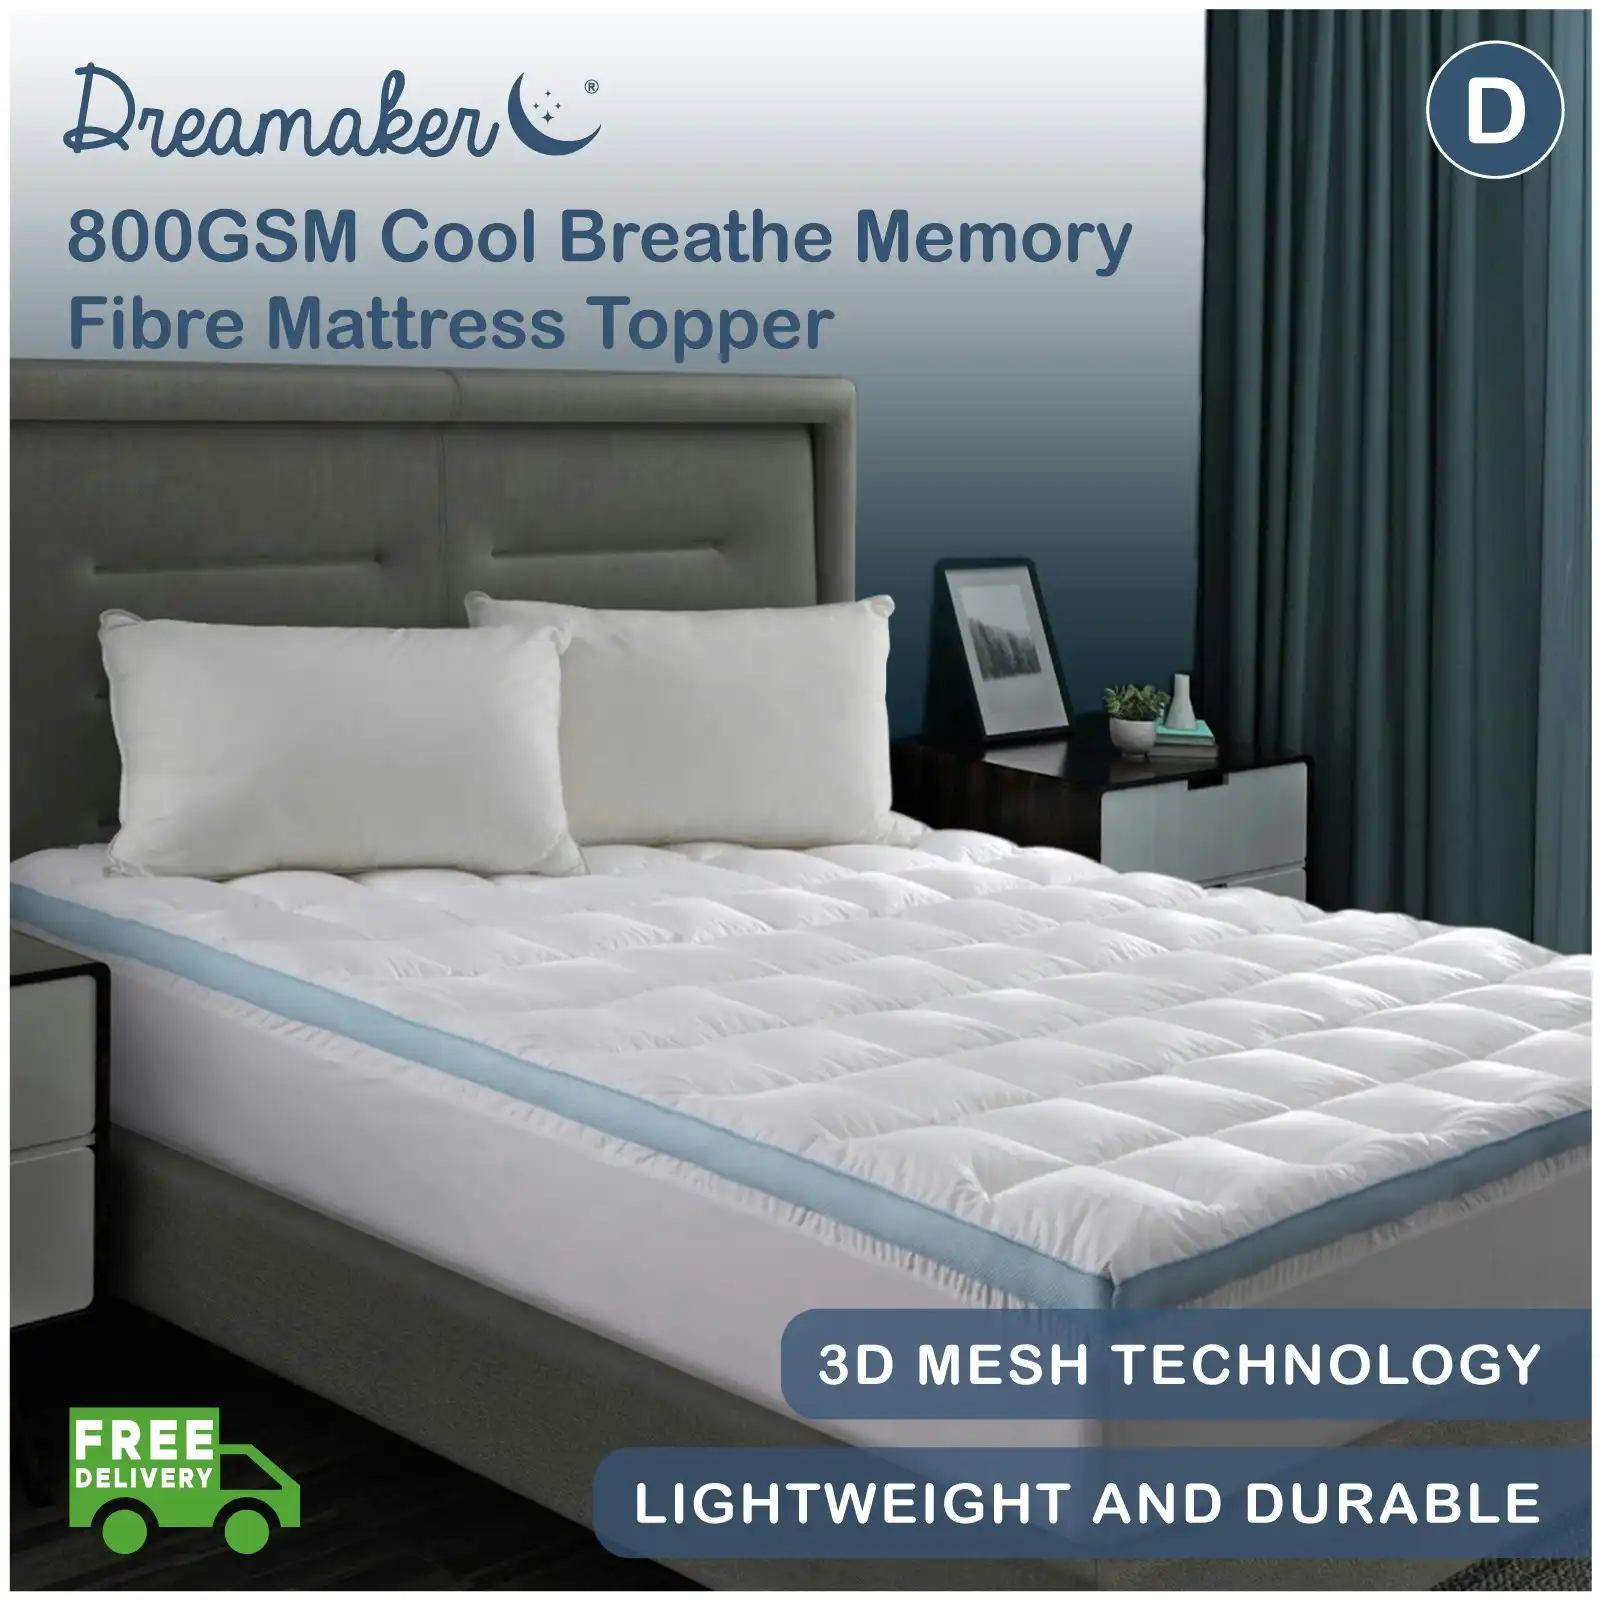 Dreamaker 800GSM Cool Breathe Memory Fibre Mattress Topper Double Bed